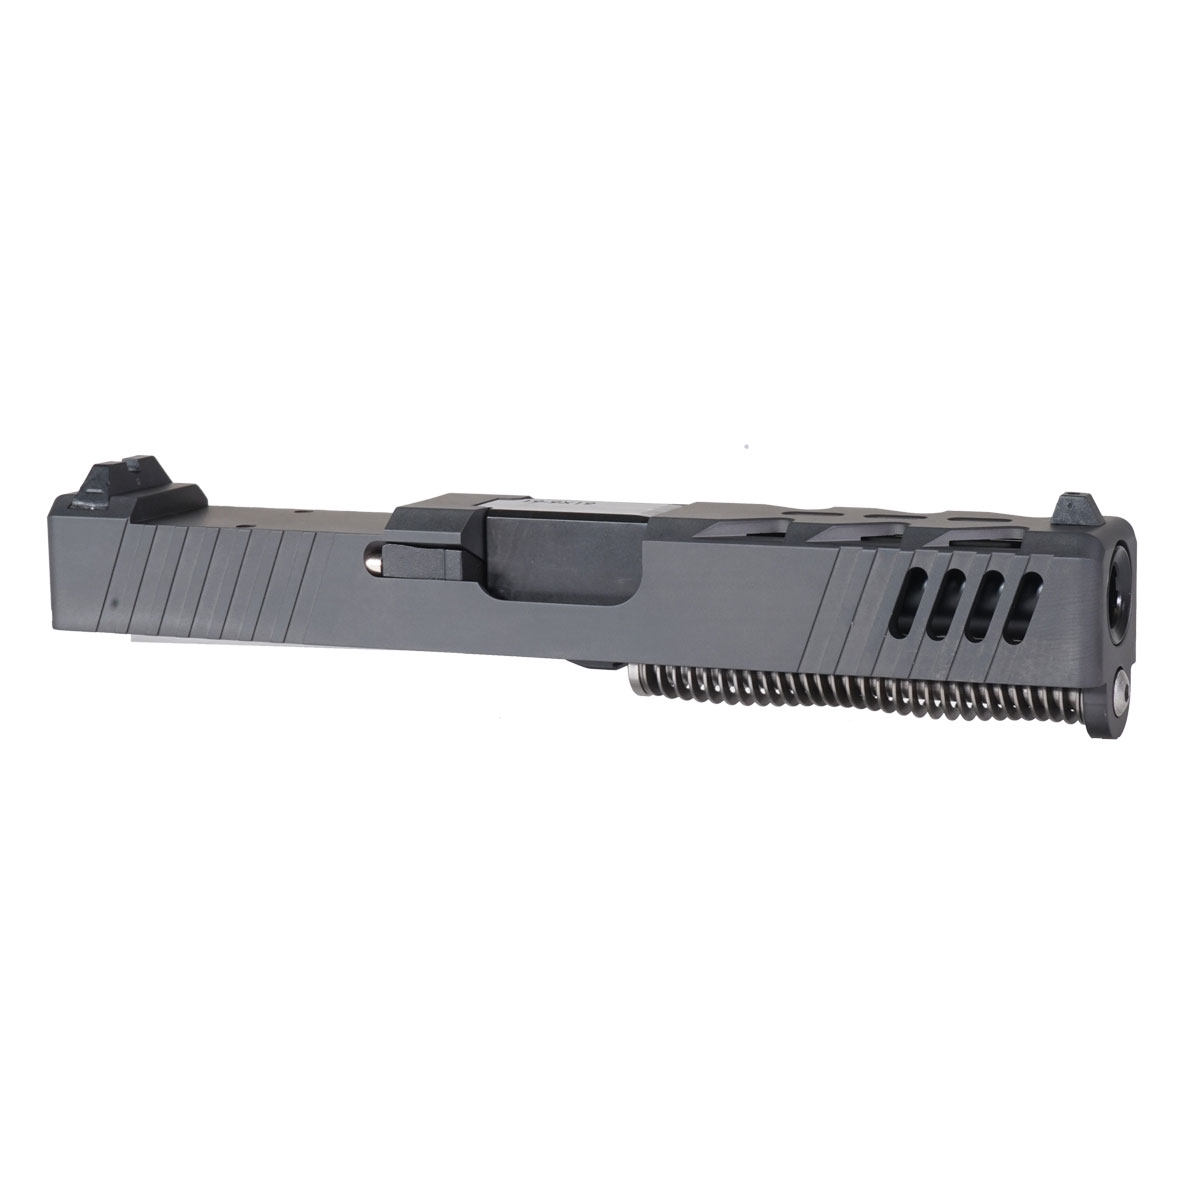 MMC 'The Yiker' 9mm Complete Slide Kit - Glock 19 Gen 1-3 Compatible